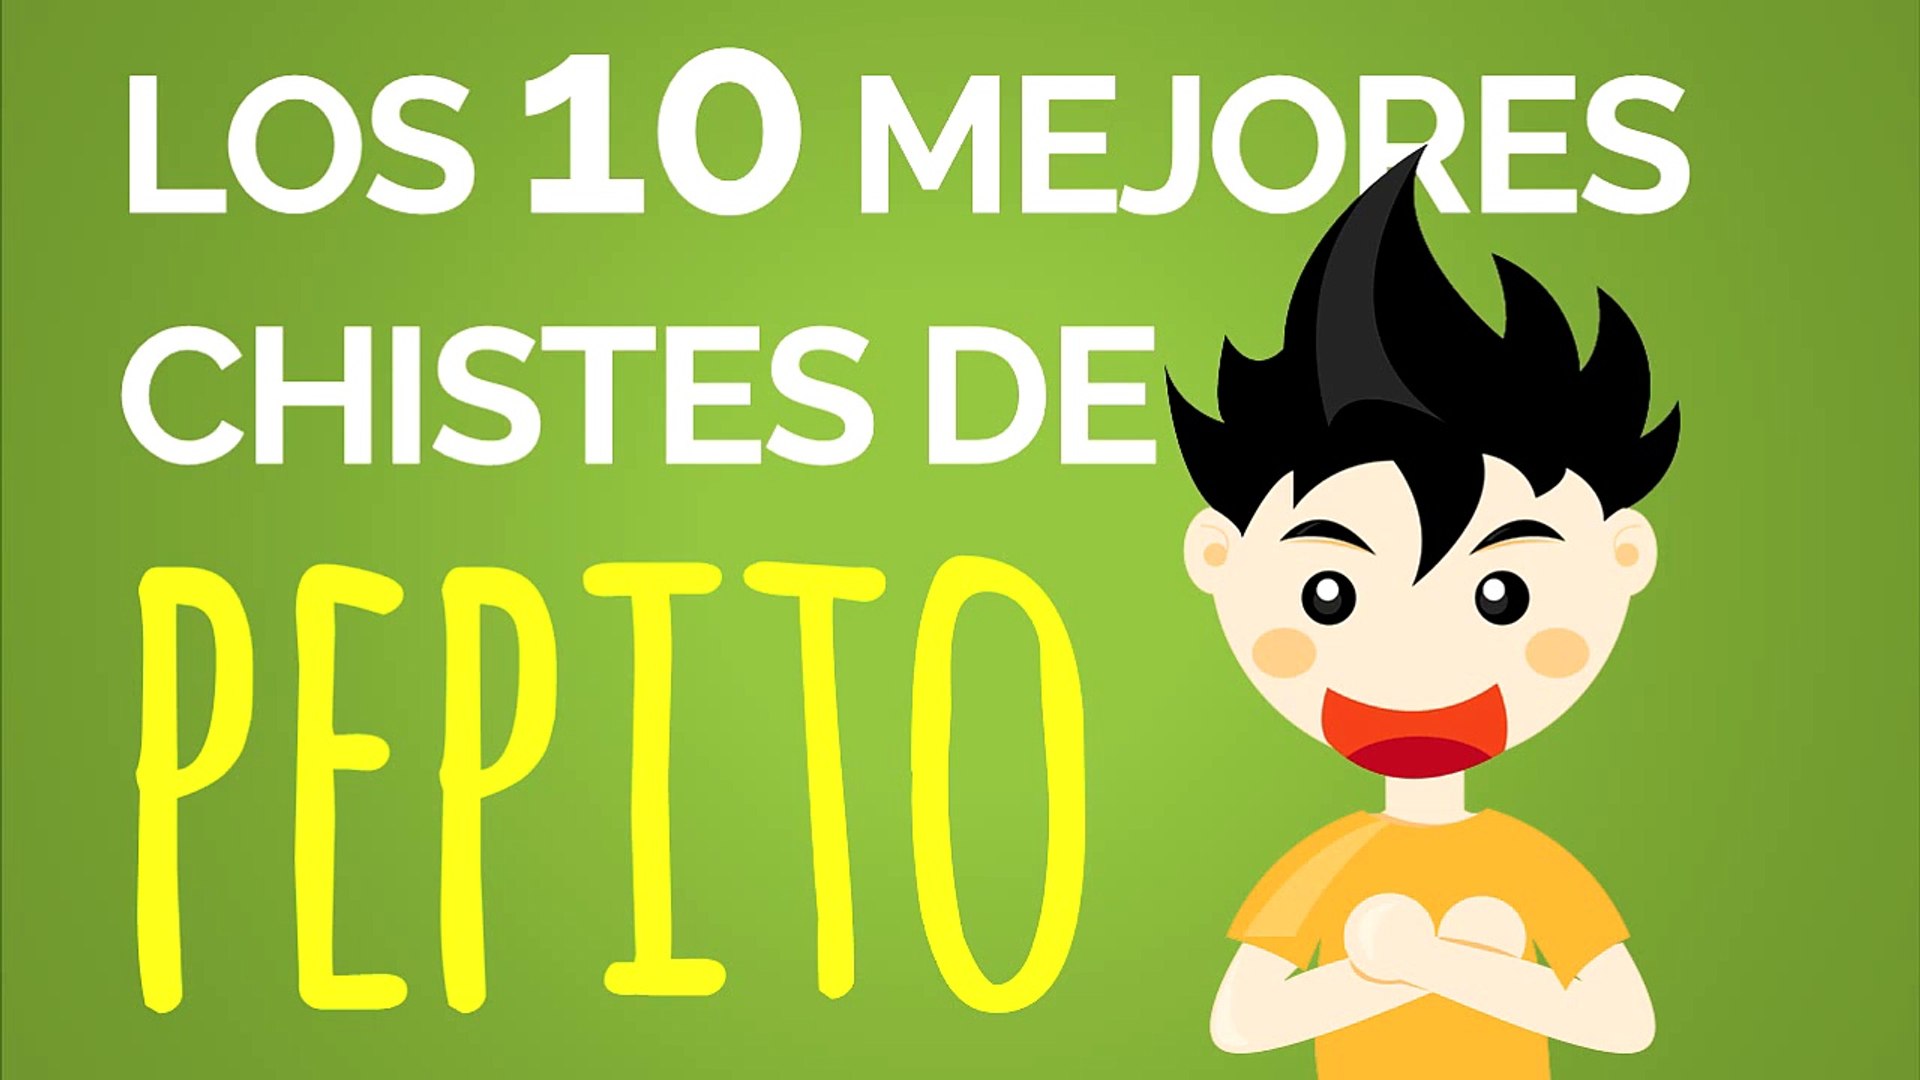 Los 10 mejores CHISTES DE PEPITO - video Dailymotion